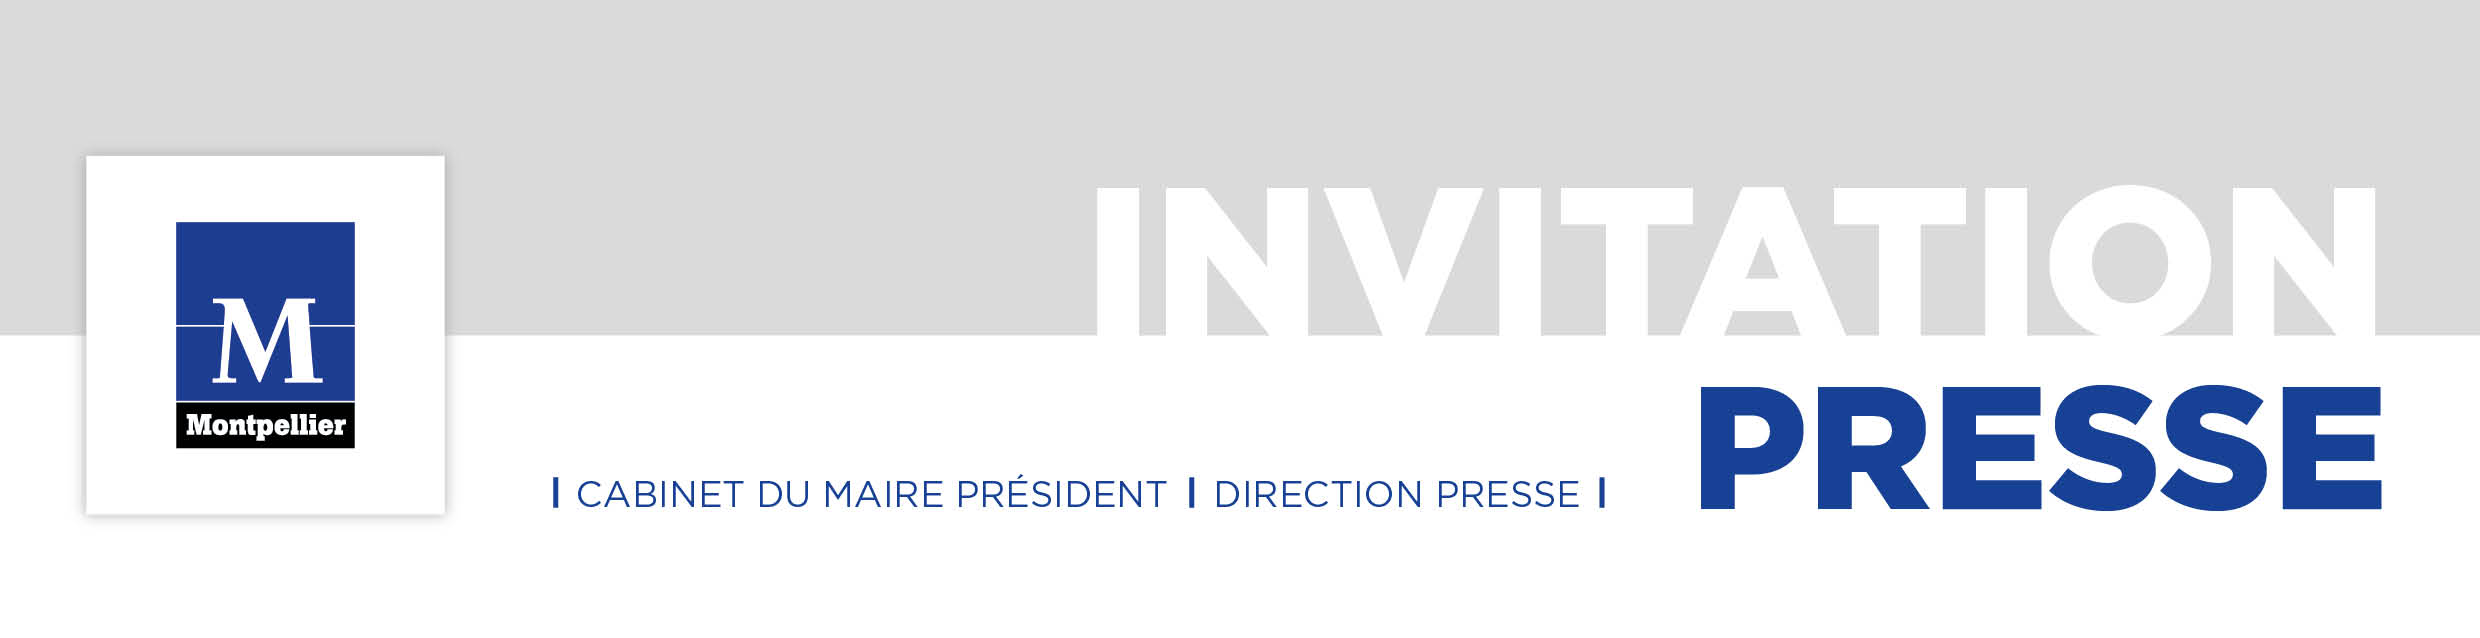 Bandeau Ville-Invitation presse_11 20_LV2.jpg